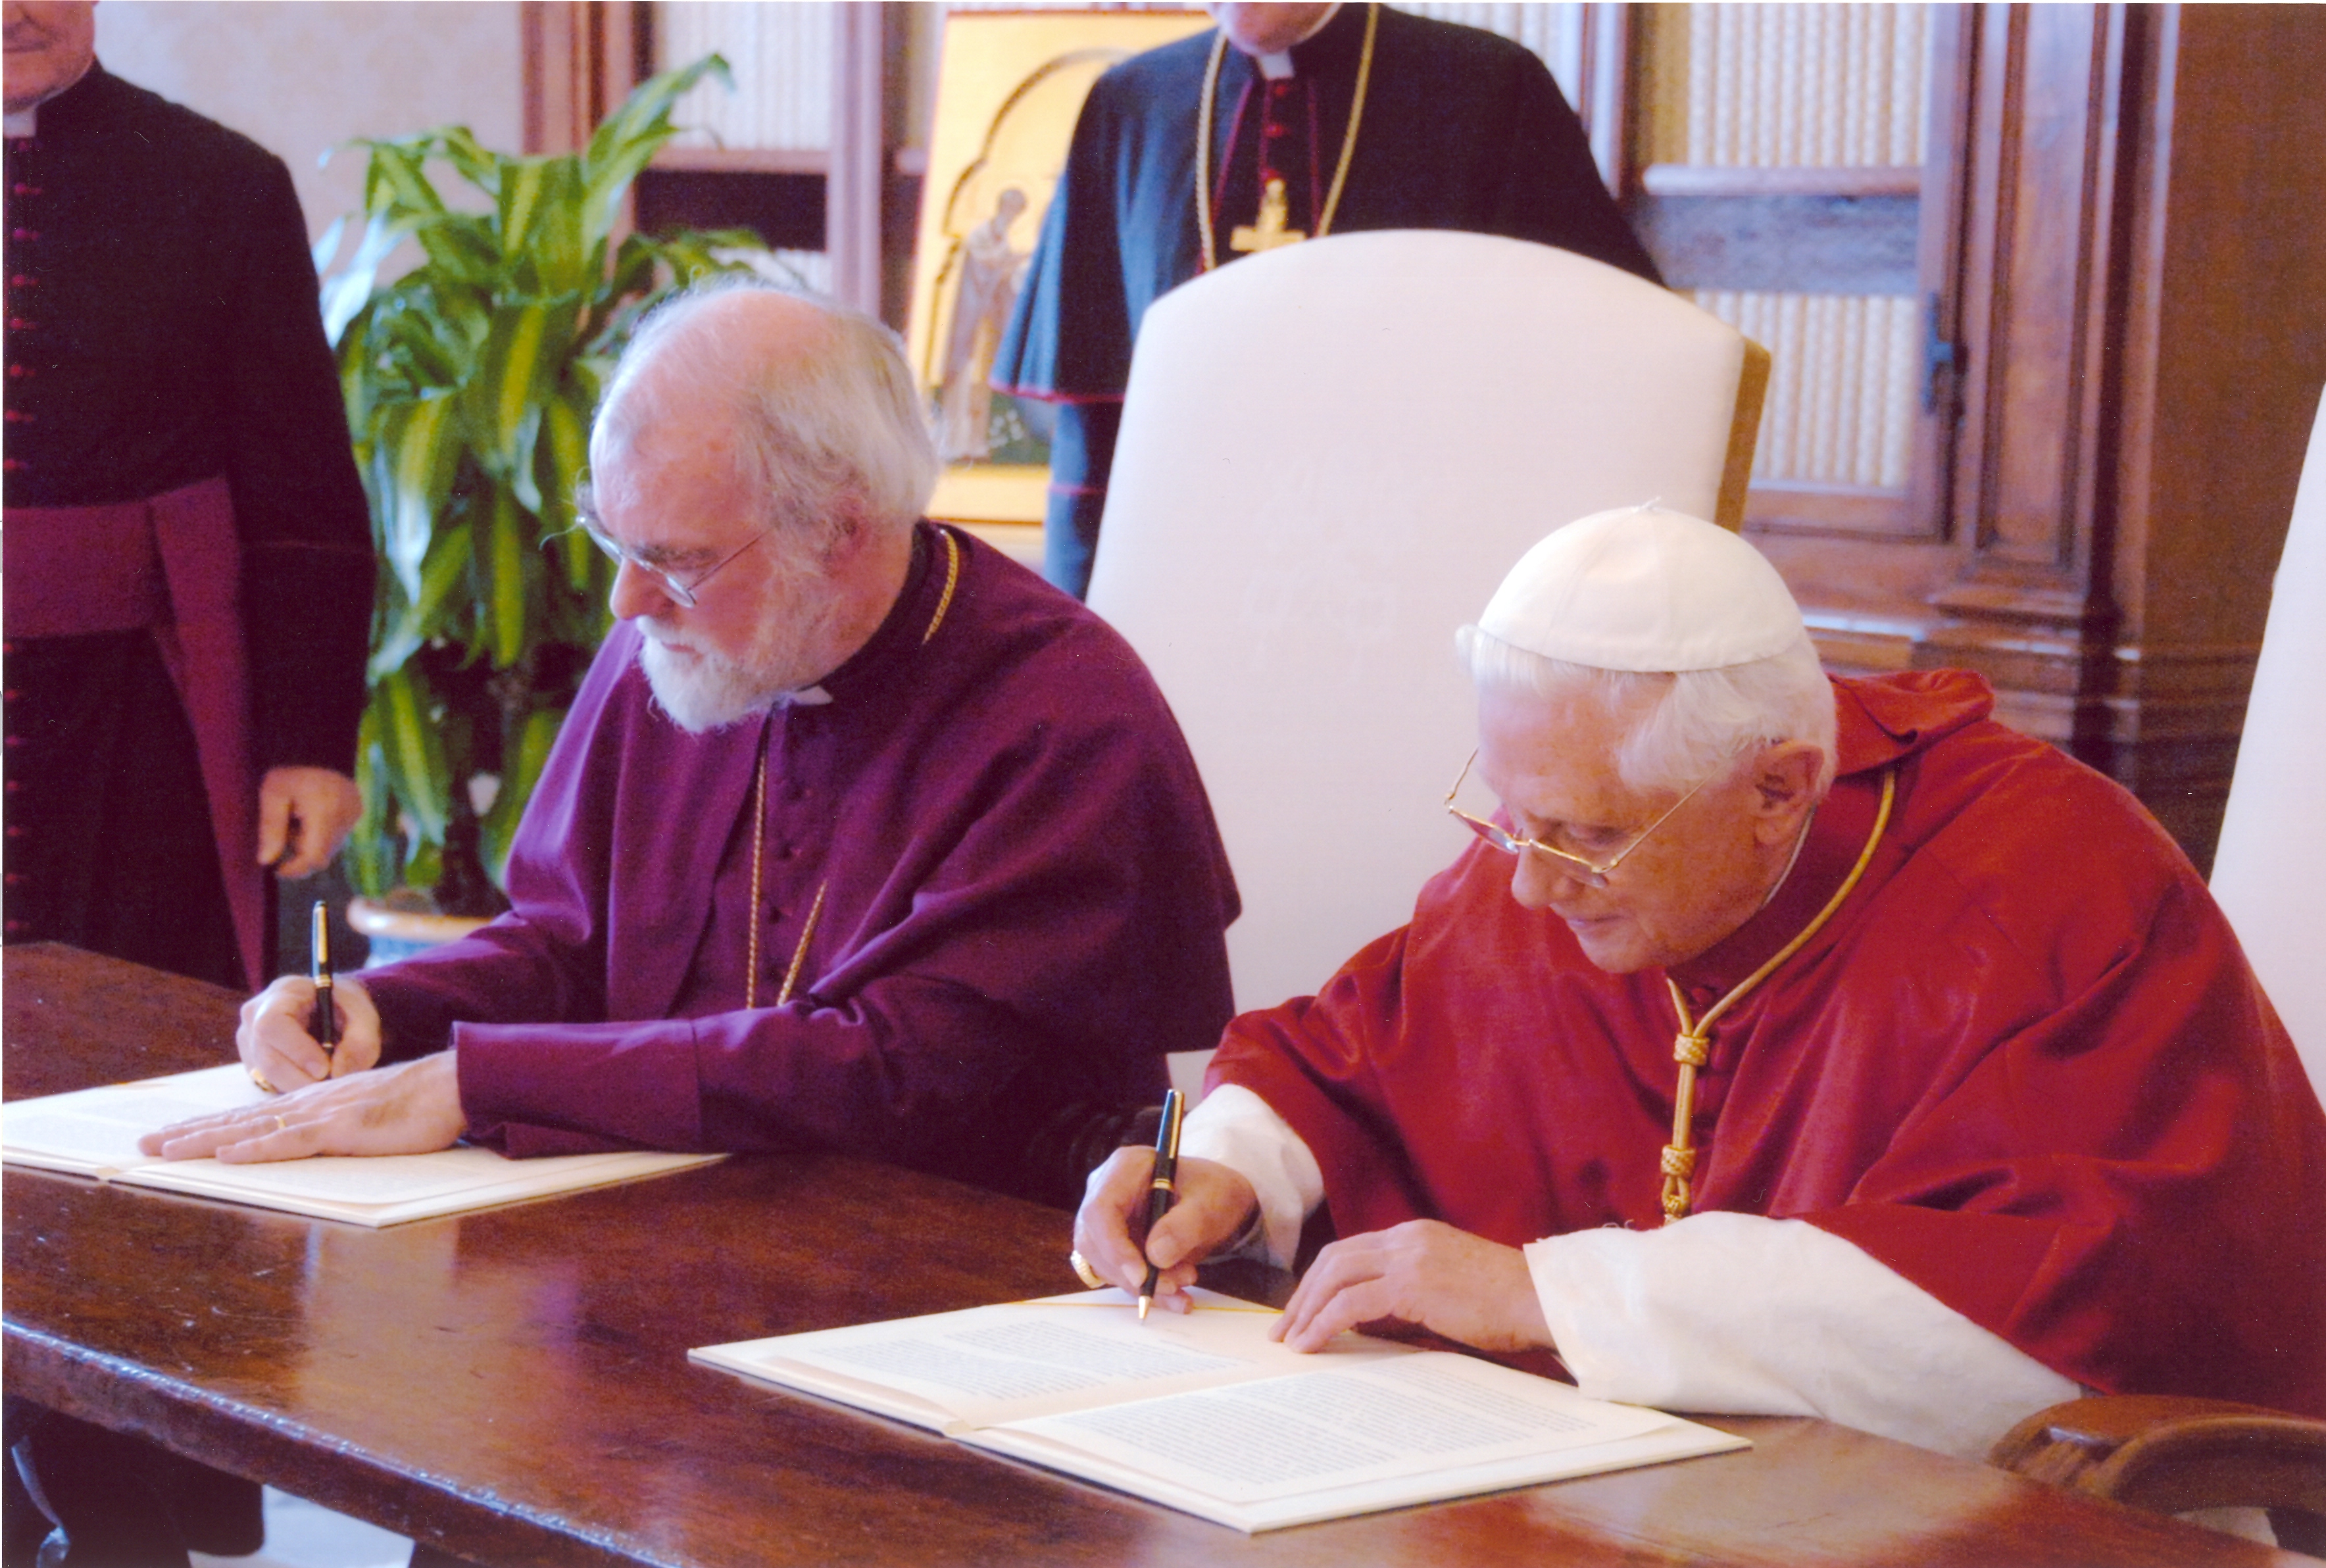 Archbishop Rowan Williams and Pope Benedict XVI - Common Declaration